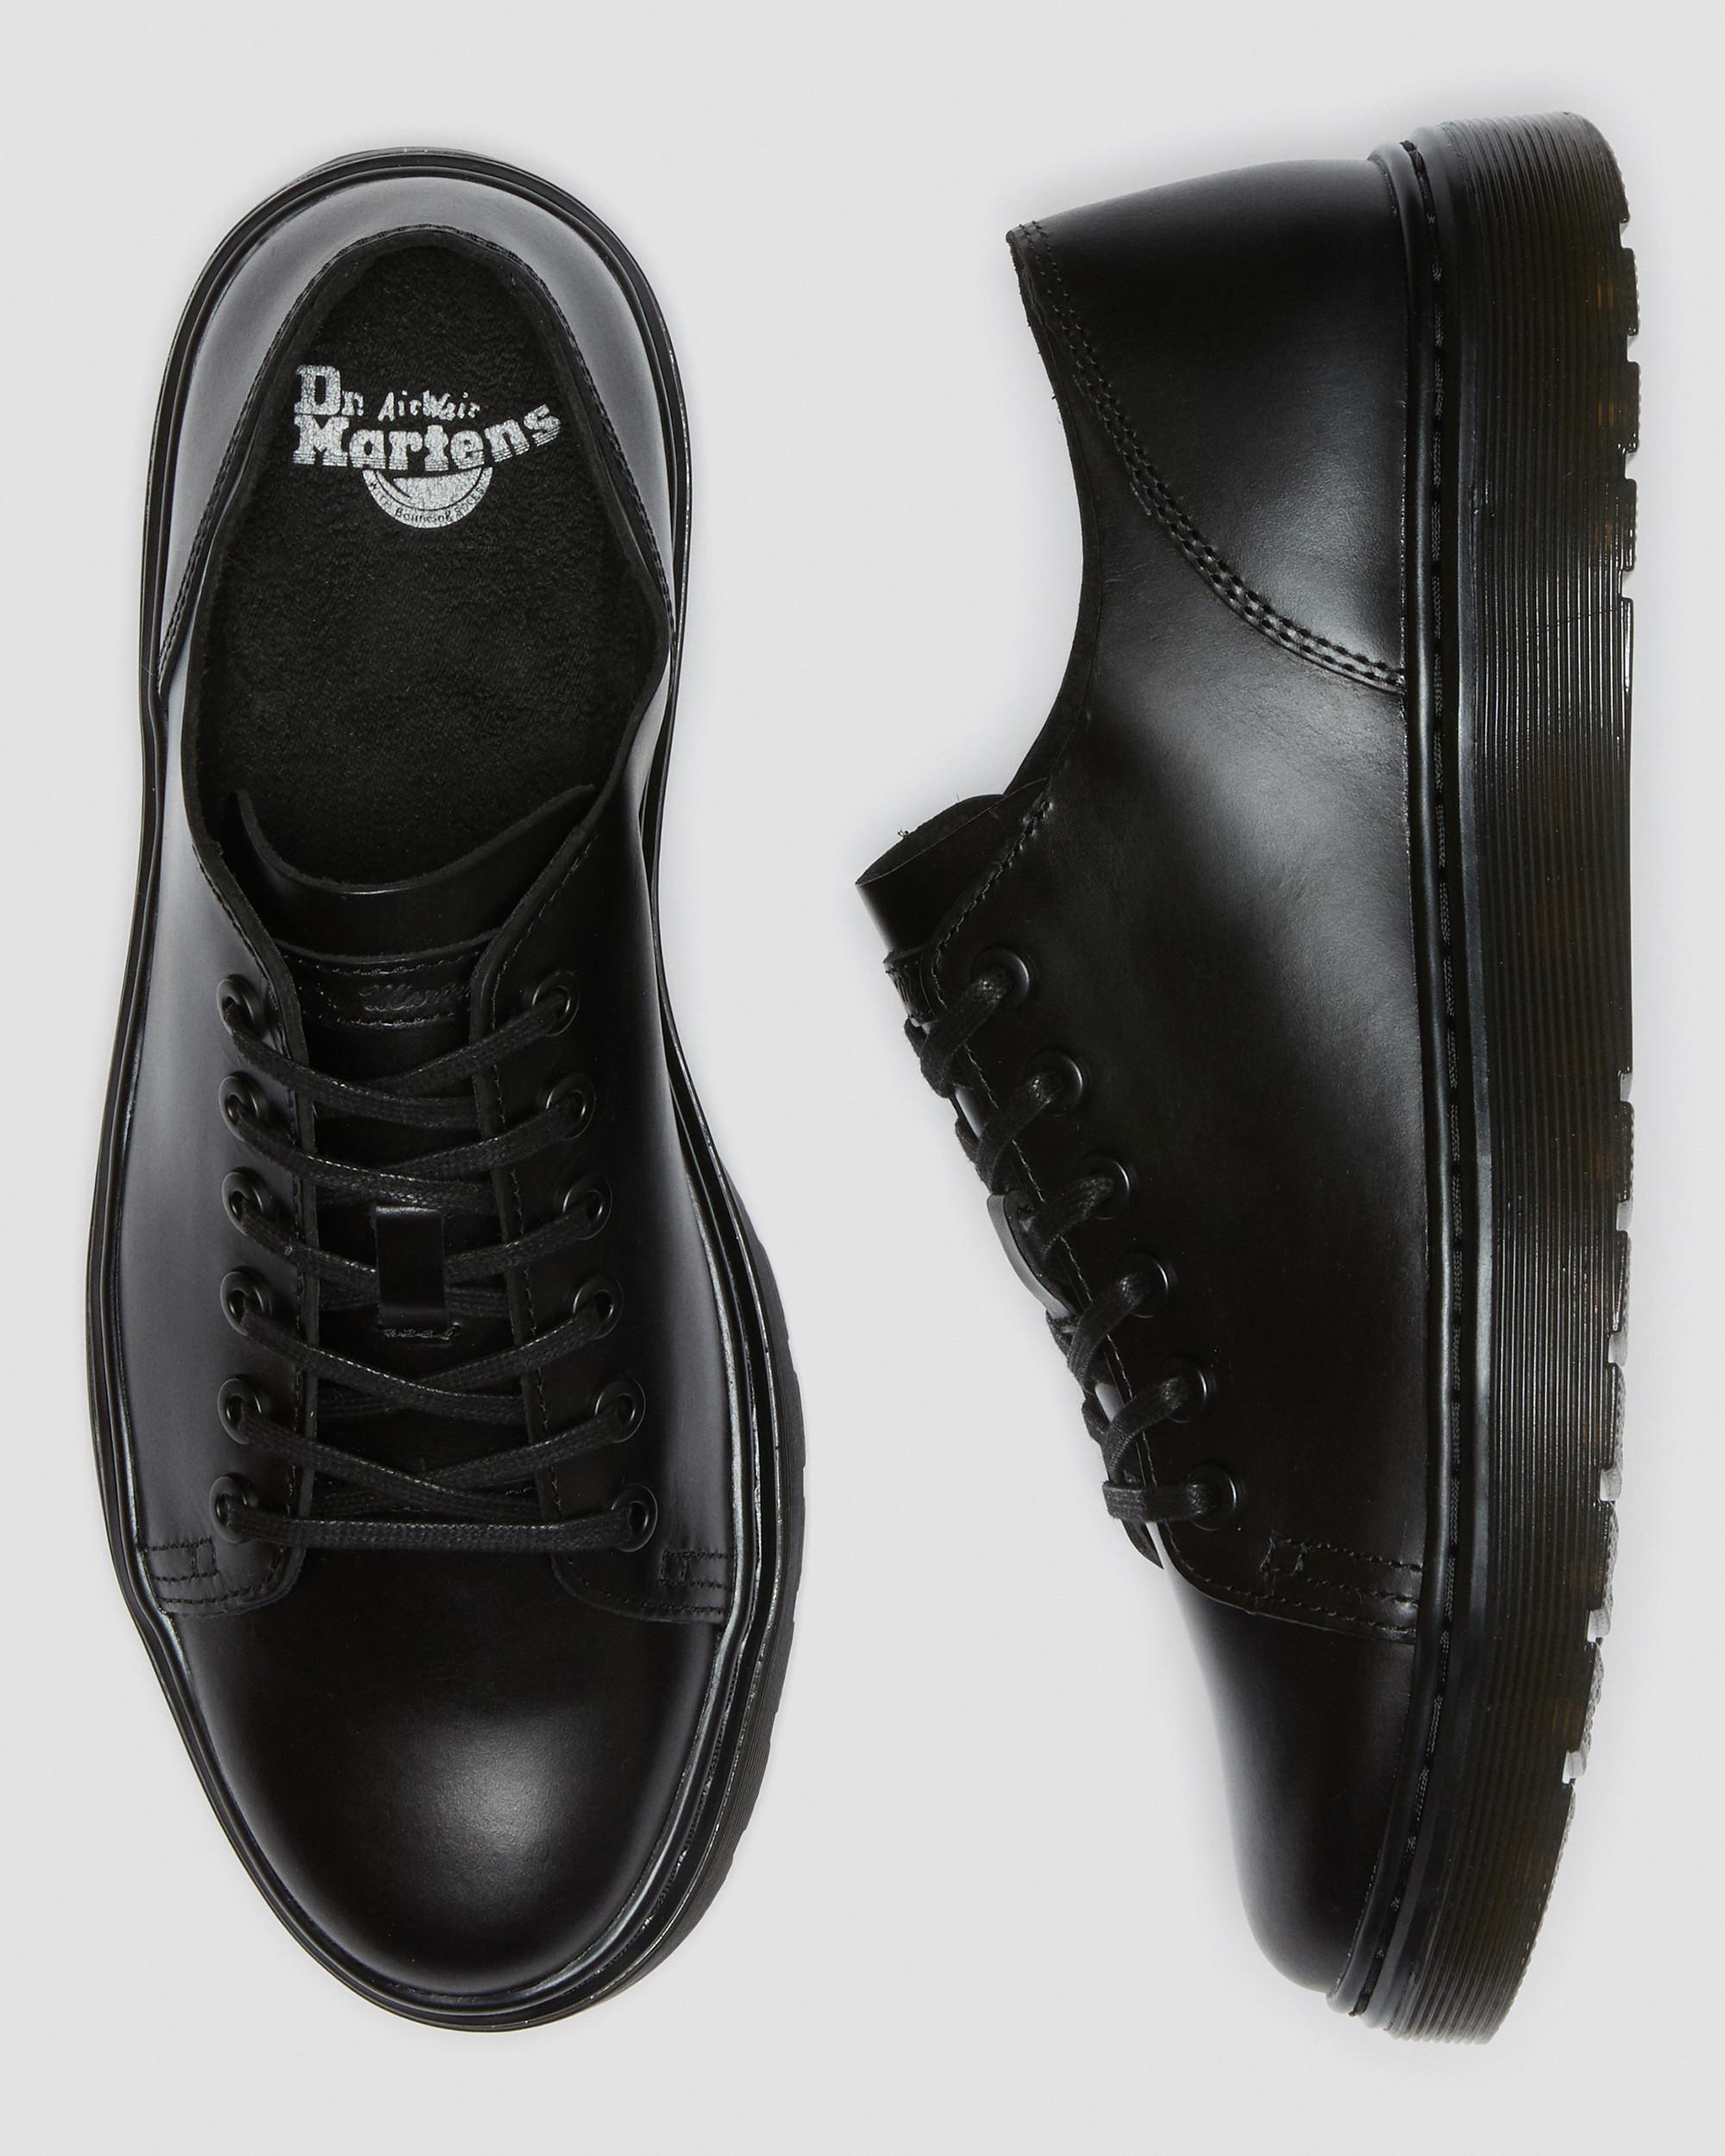 Dante Brando Leather Casual Shoes in Black